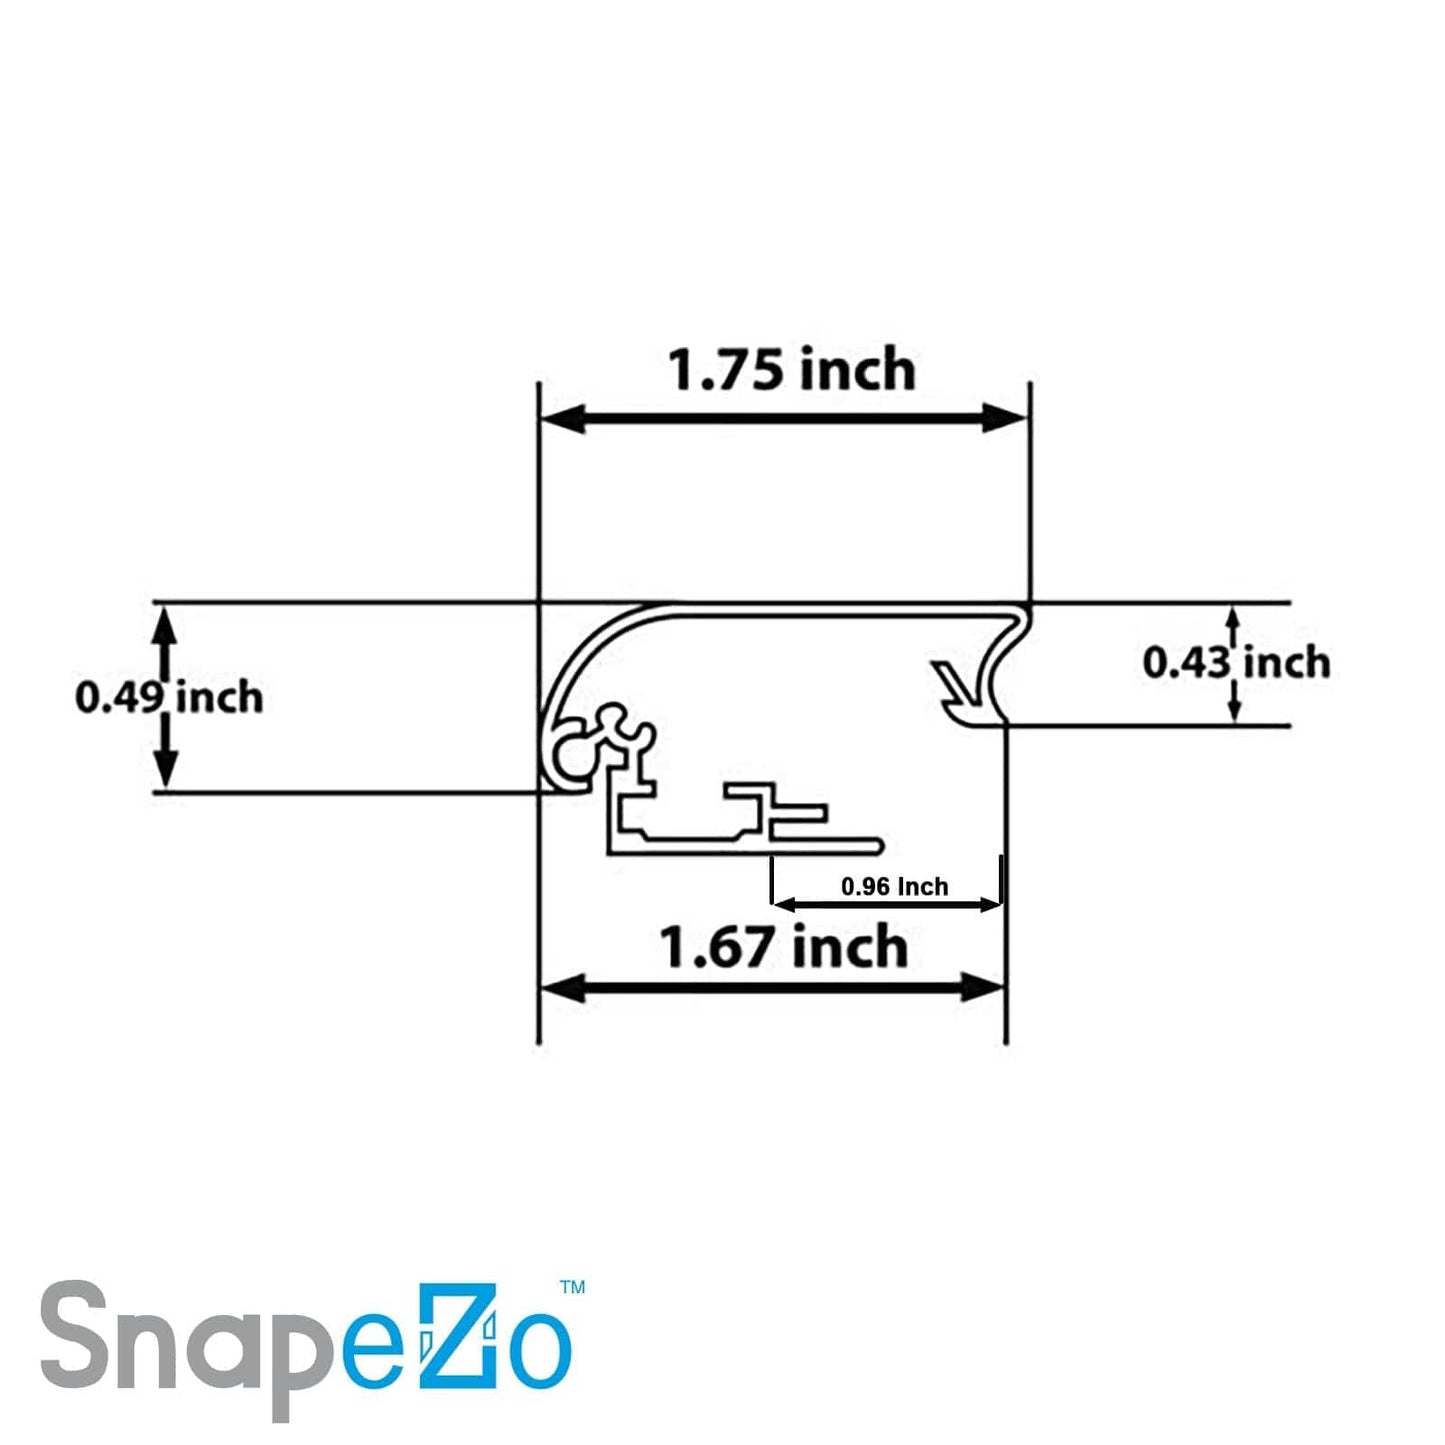 32x46 Black SnapeZo® Snap Frame - 1.7" Profile - Snap Frames Direct